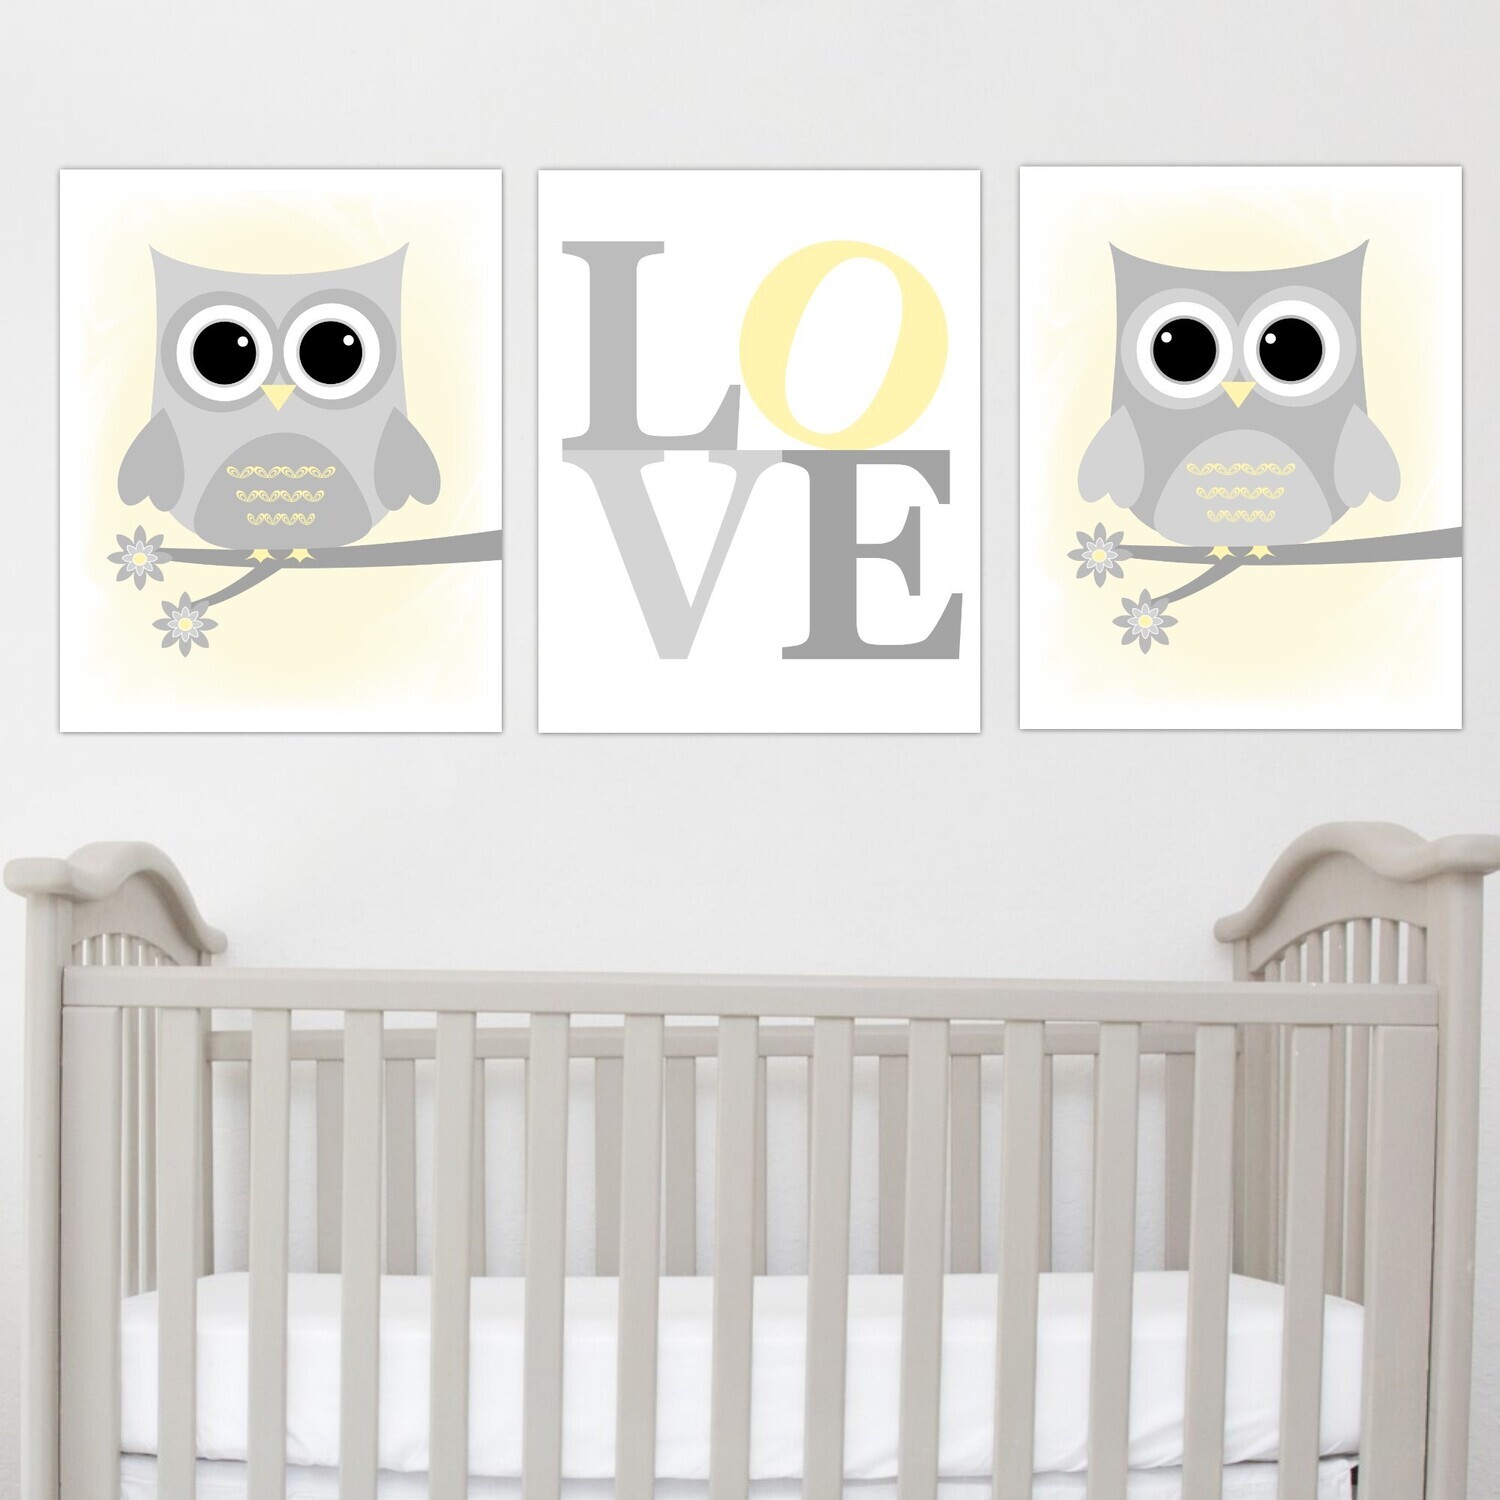 Owl Baby Boy Nursery Wall Art Yellow Gray Boy Nursery Decor Owl Pictures Baby Nursery Decor SET OF 3 UNFRAMED PRINTS